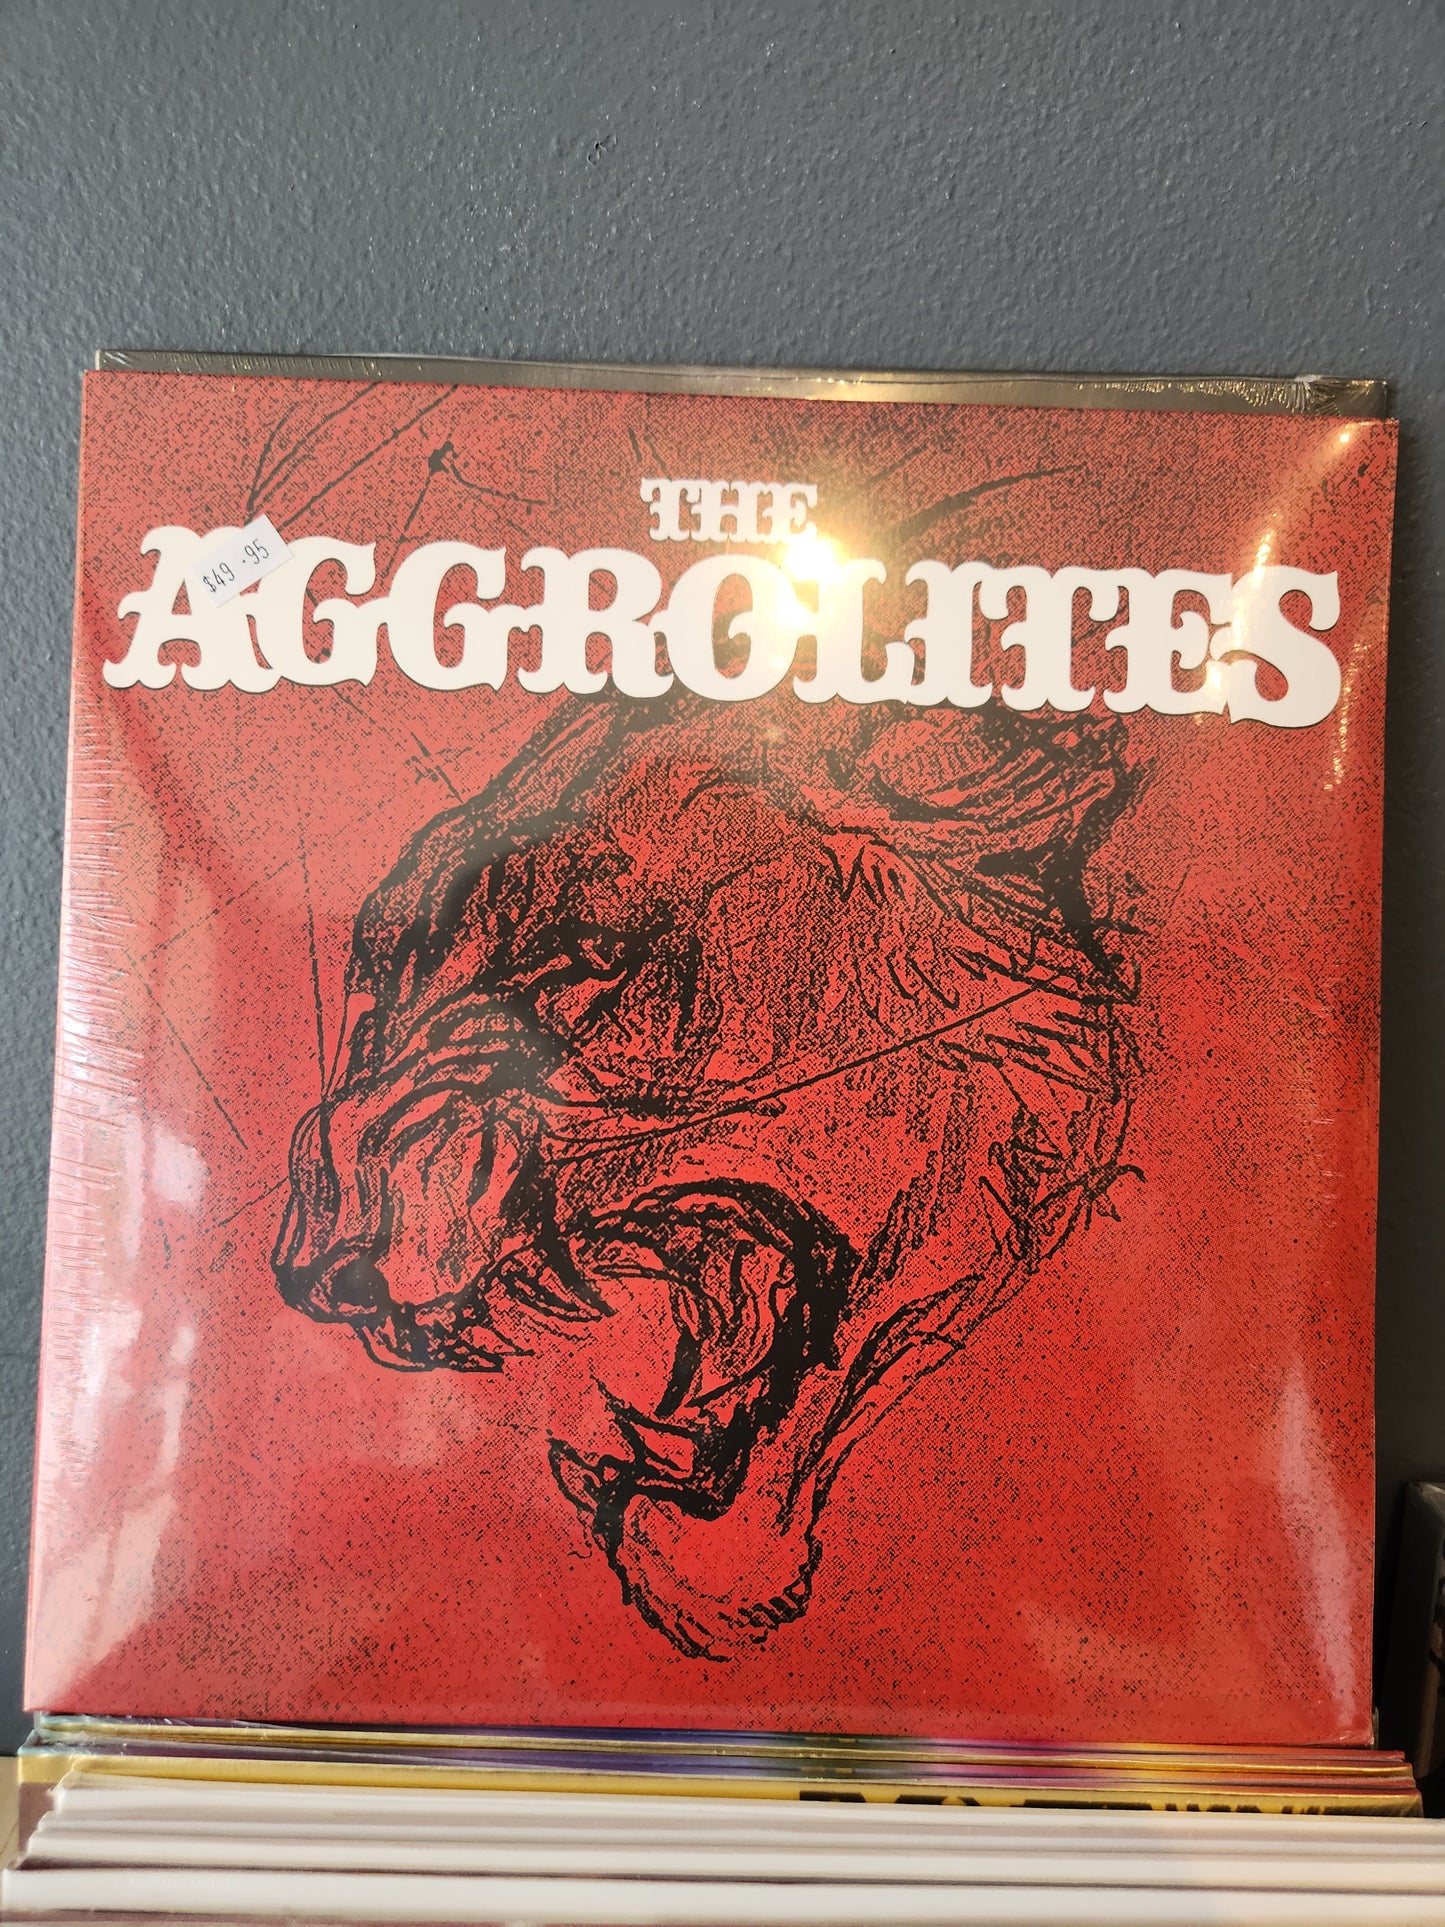 Aggrolites - Self Tittled - Double Vinyl LP